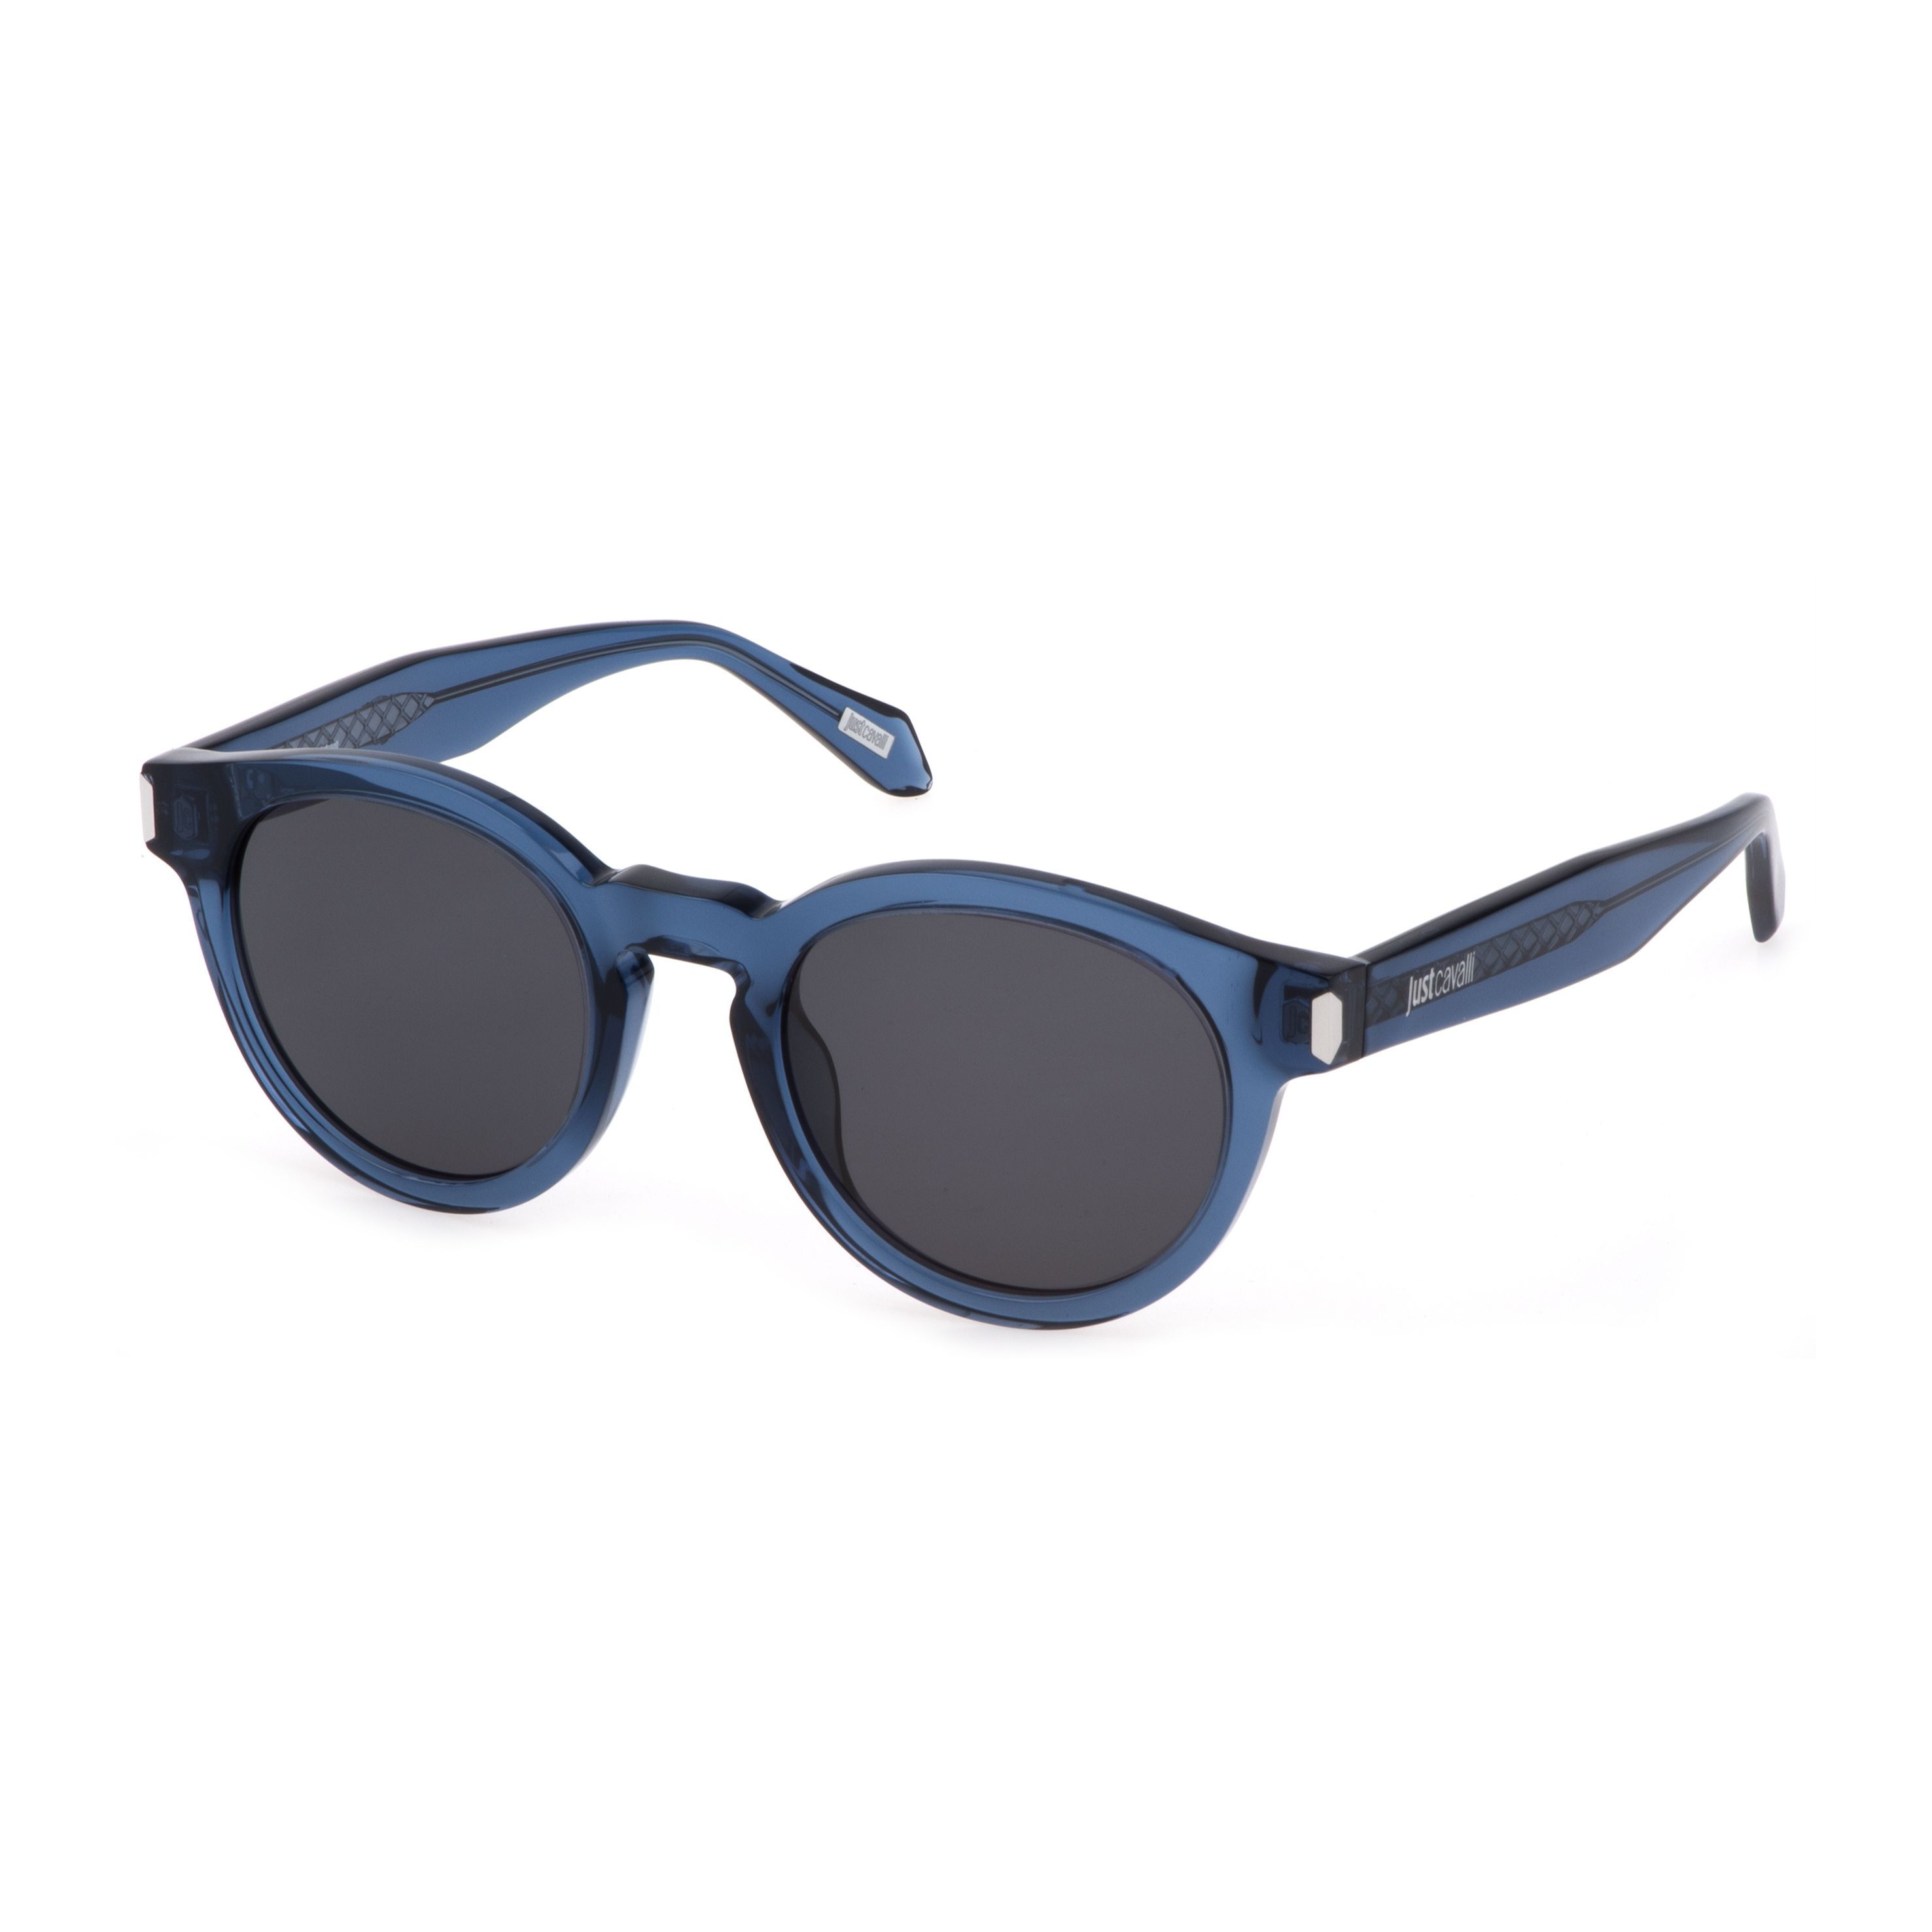 SJC025 Panthos Sunglasses 0U11 - size 50